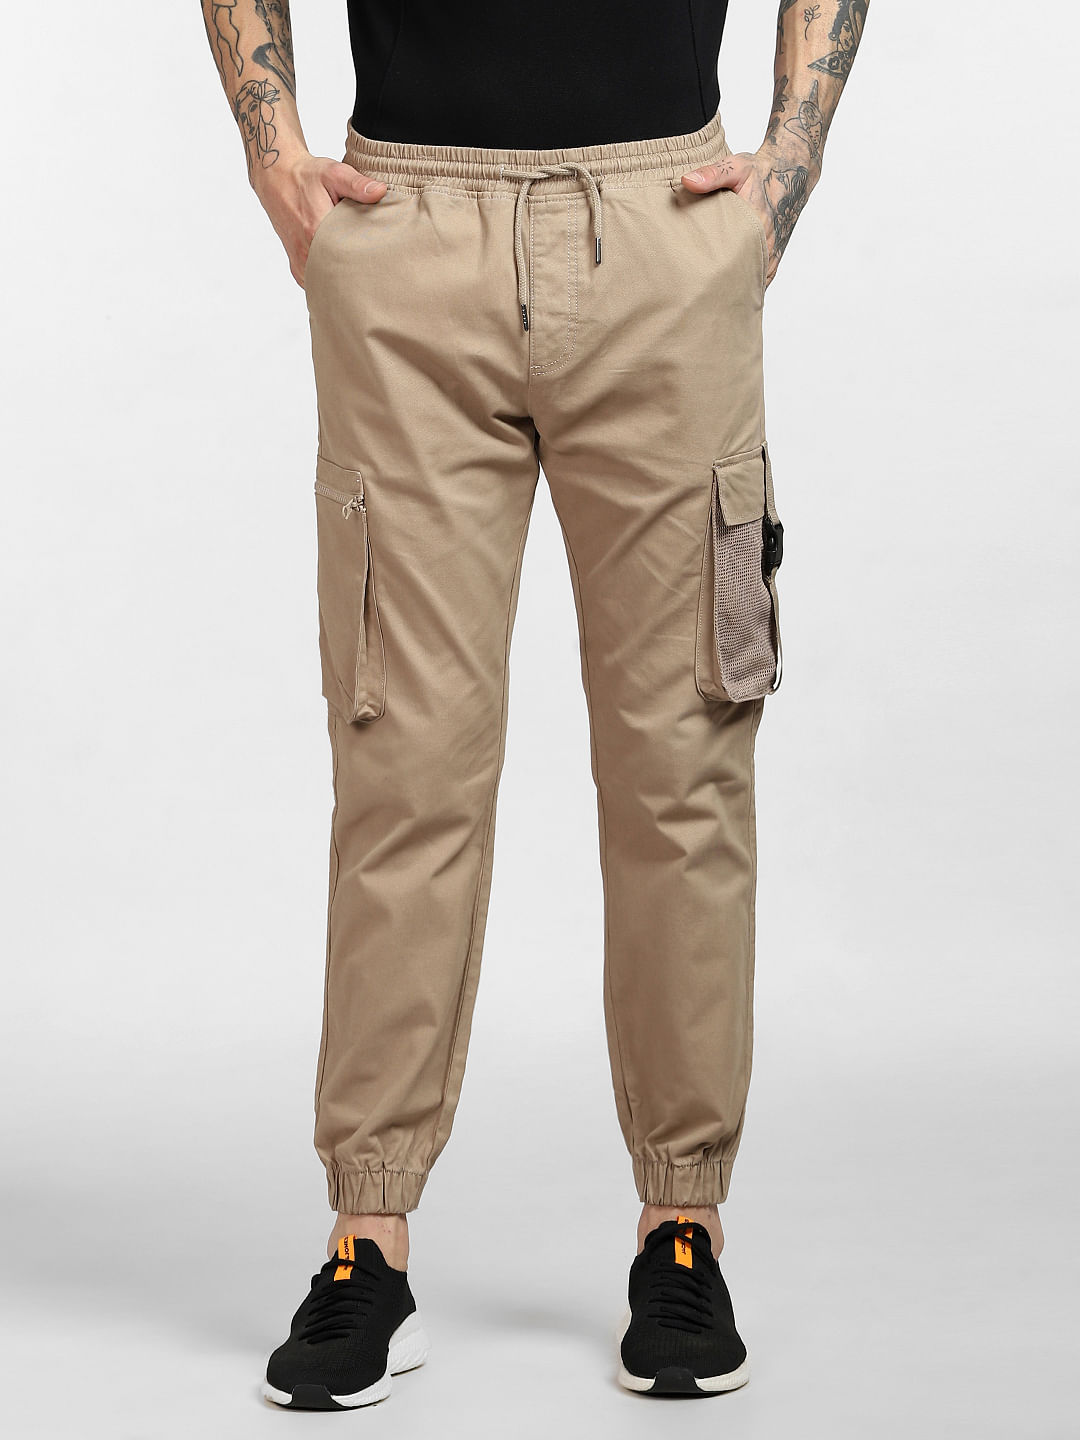 White narrow cotton trousers | Buy white narrow pant online | Kalpané